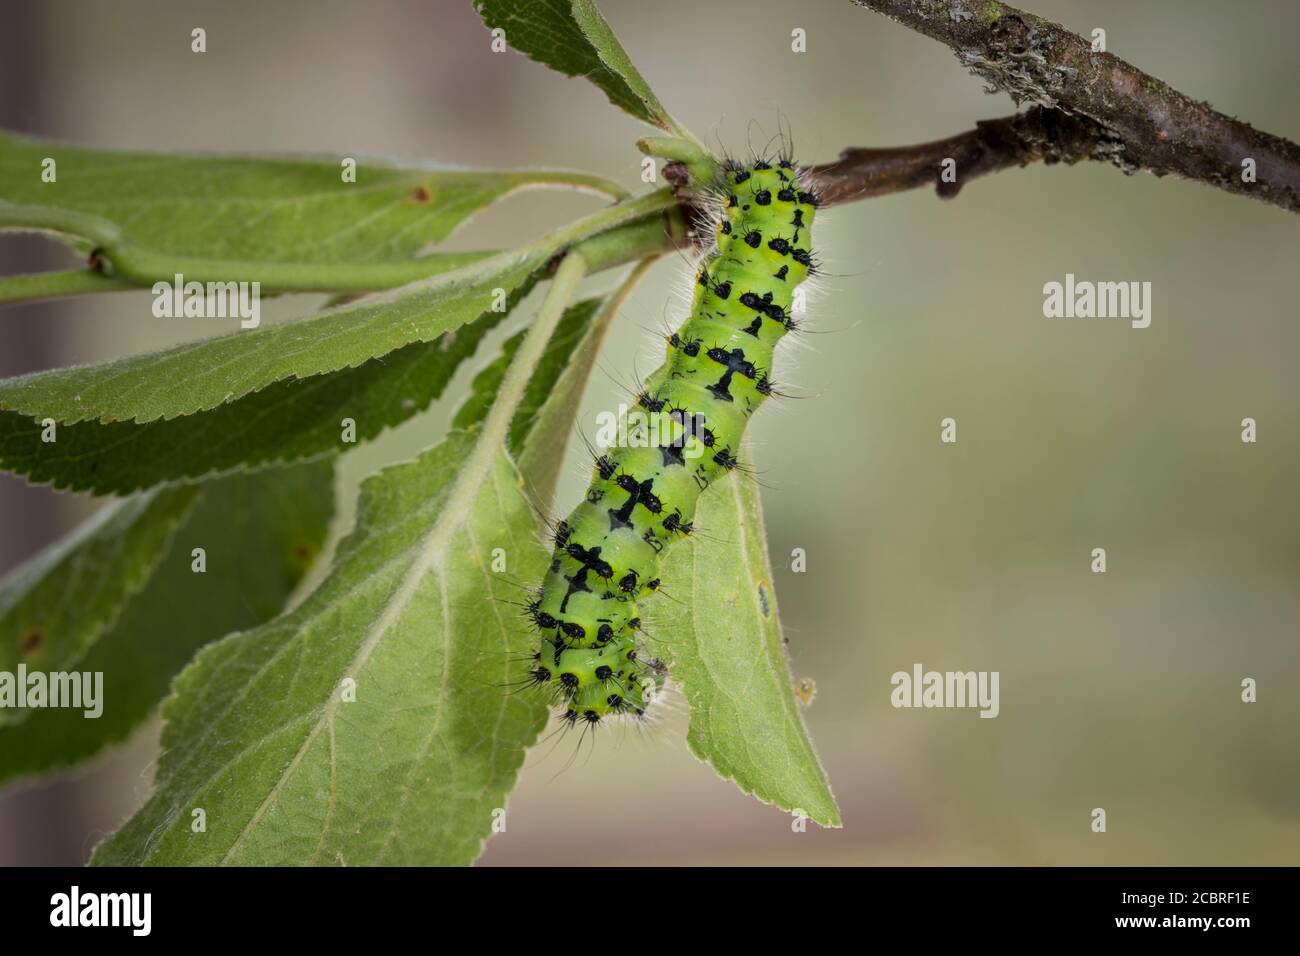 Kleines Nachtpfauenauge - Raupe, Saturnia pavonia, small emperor moth - caterpillar Stock Photo